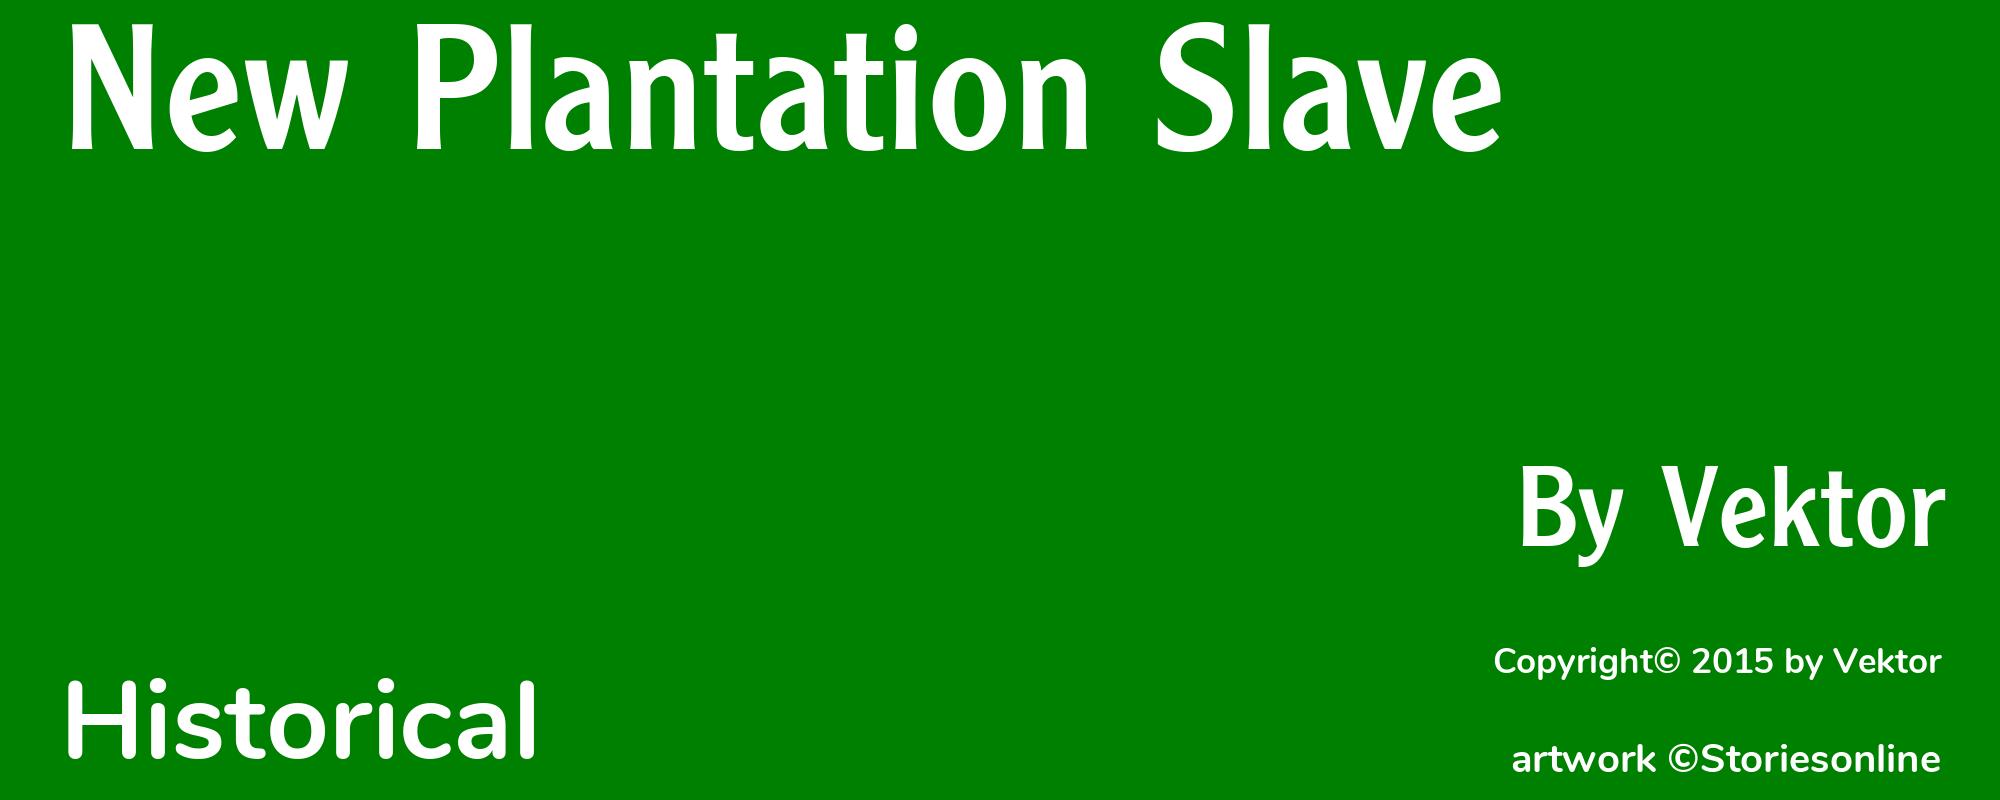 New Plantation Slave - Cover